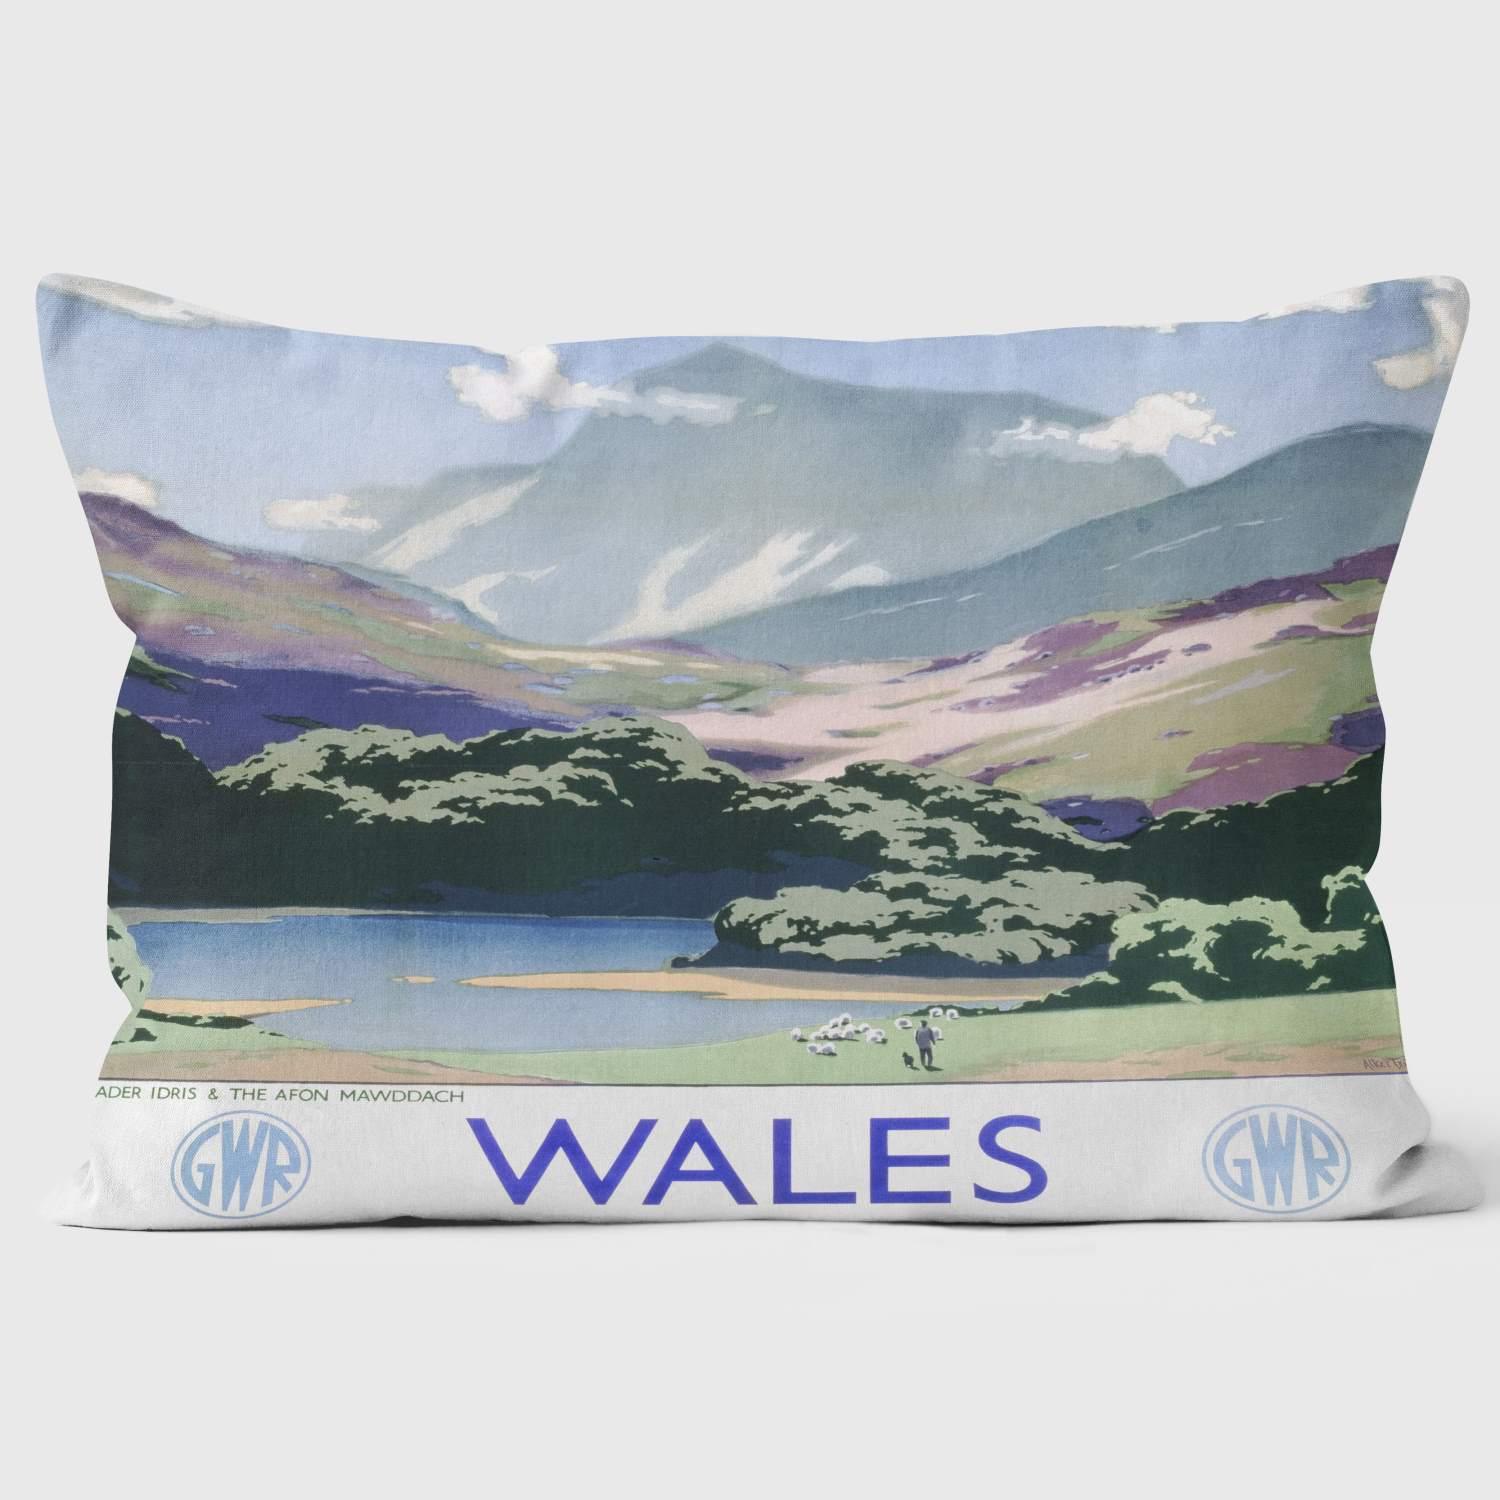 Wales GWR 1937 - National Railway Museum Cushion - Handmade Cushions UK - WeLoveCushions